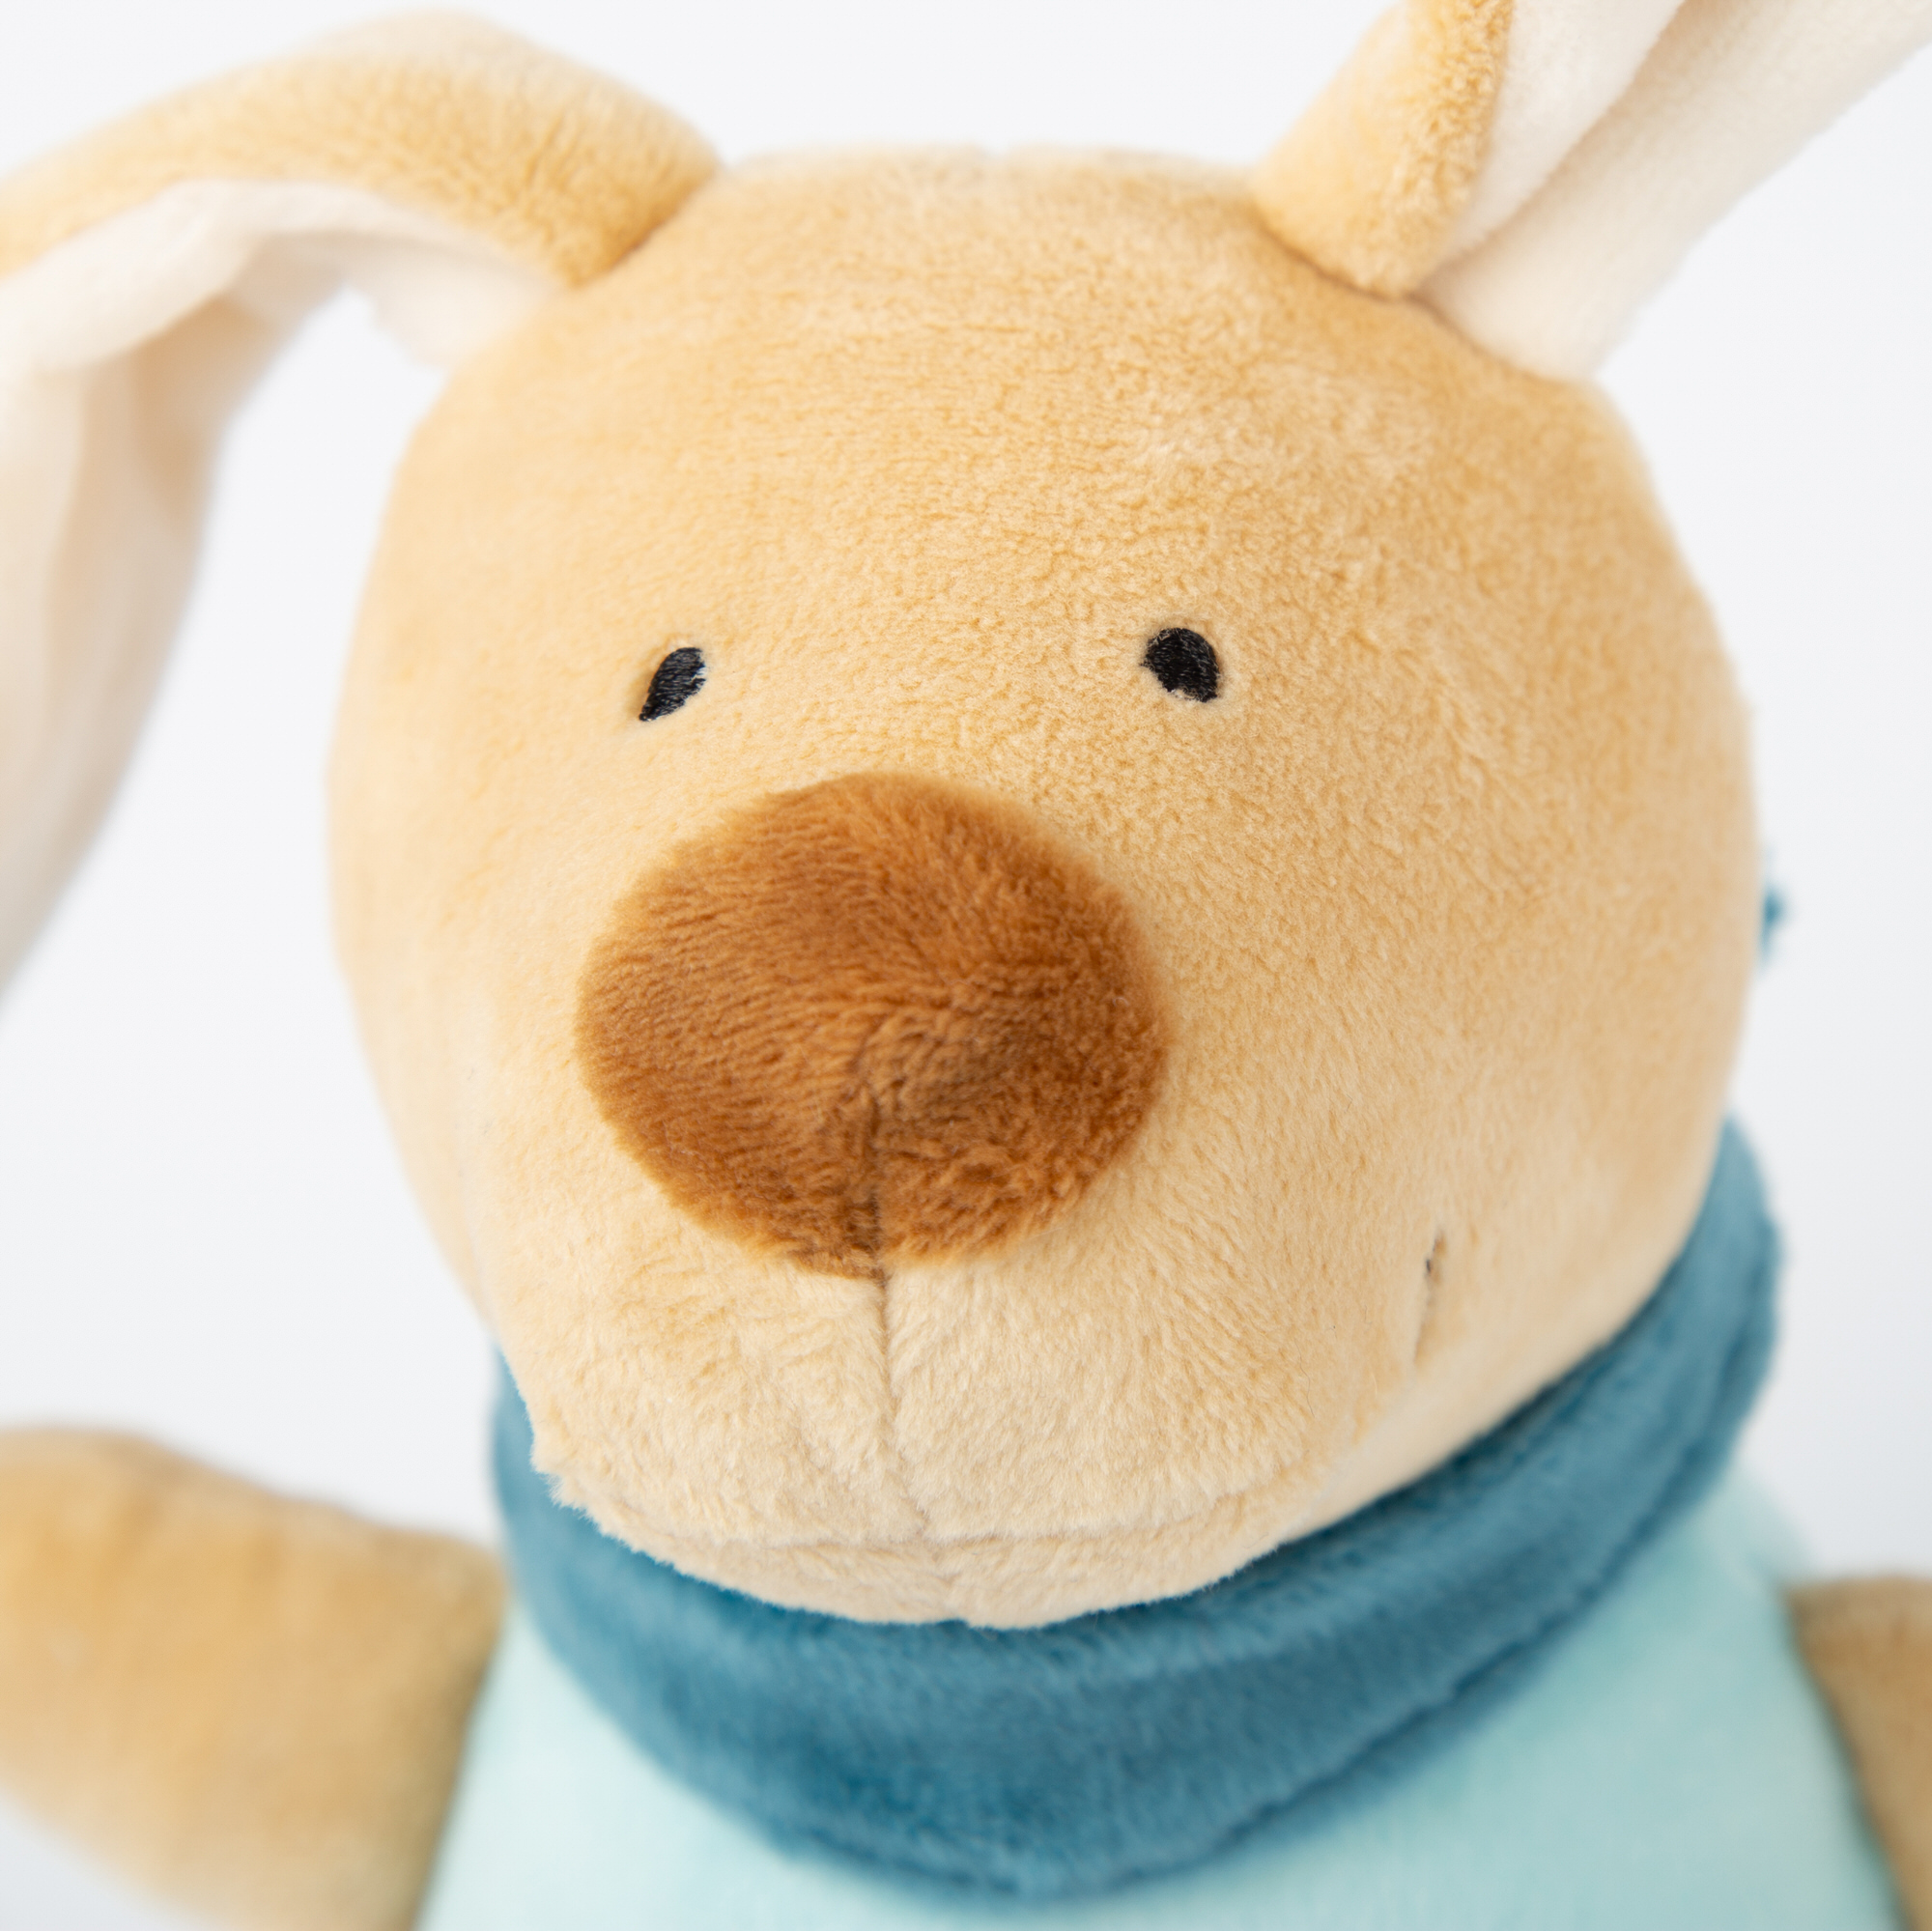 Musical mini baby plush toy rabbit